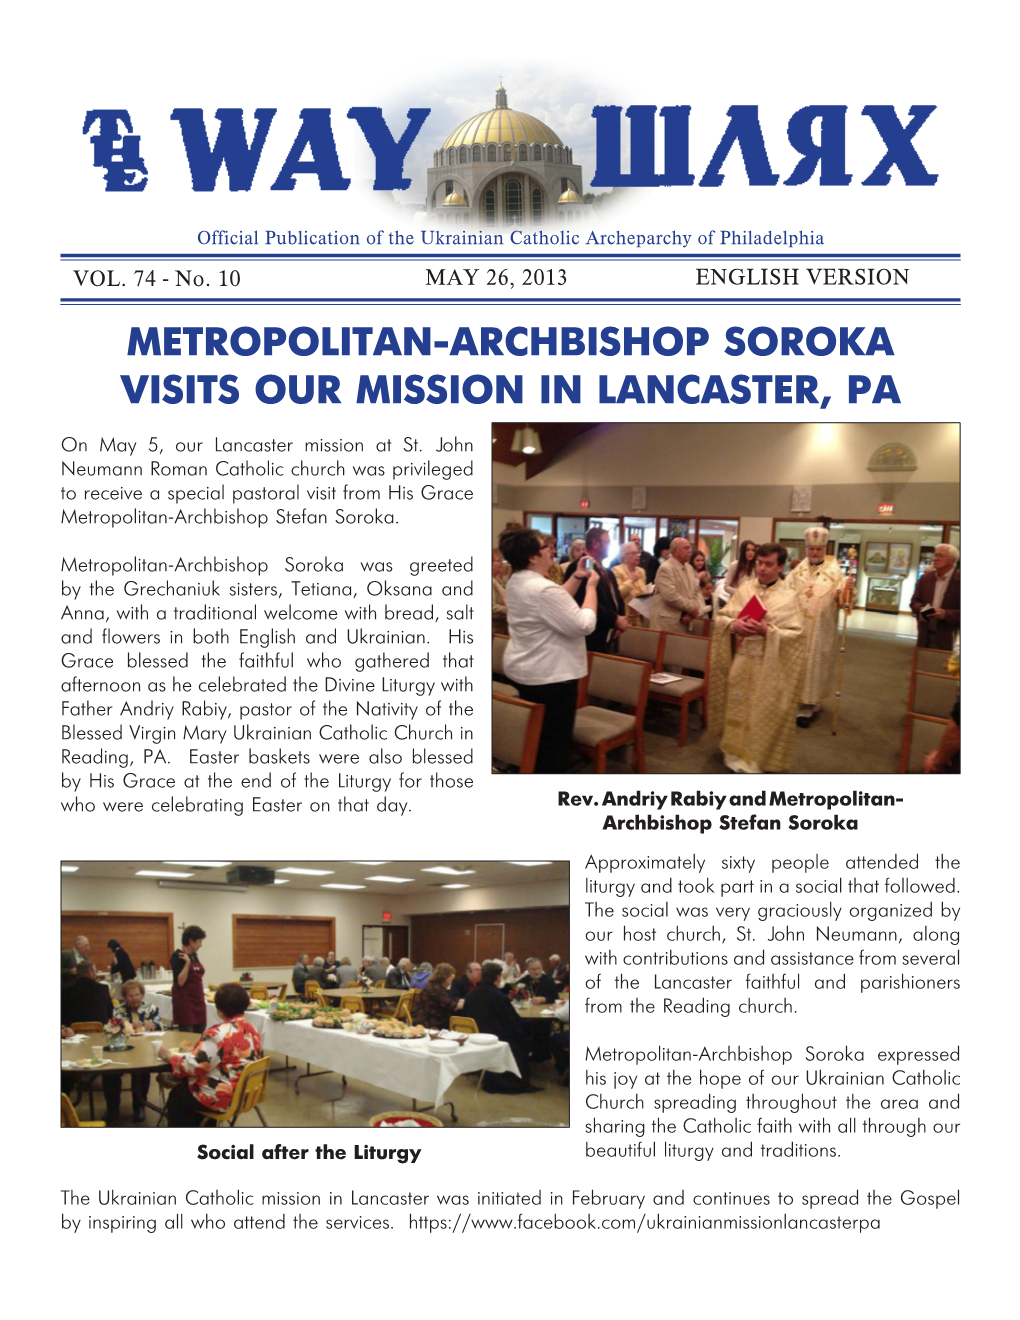 Metropolitan-Archbishop Soroka Visits Our Mission in Lancaster, Pa